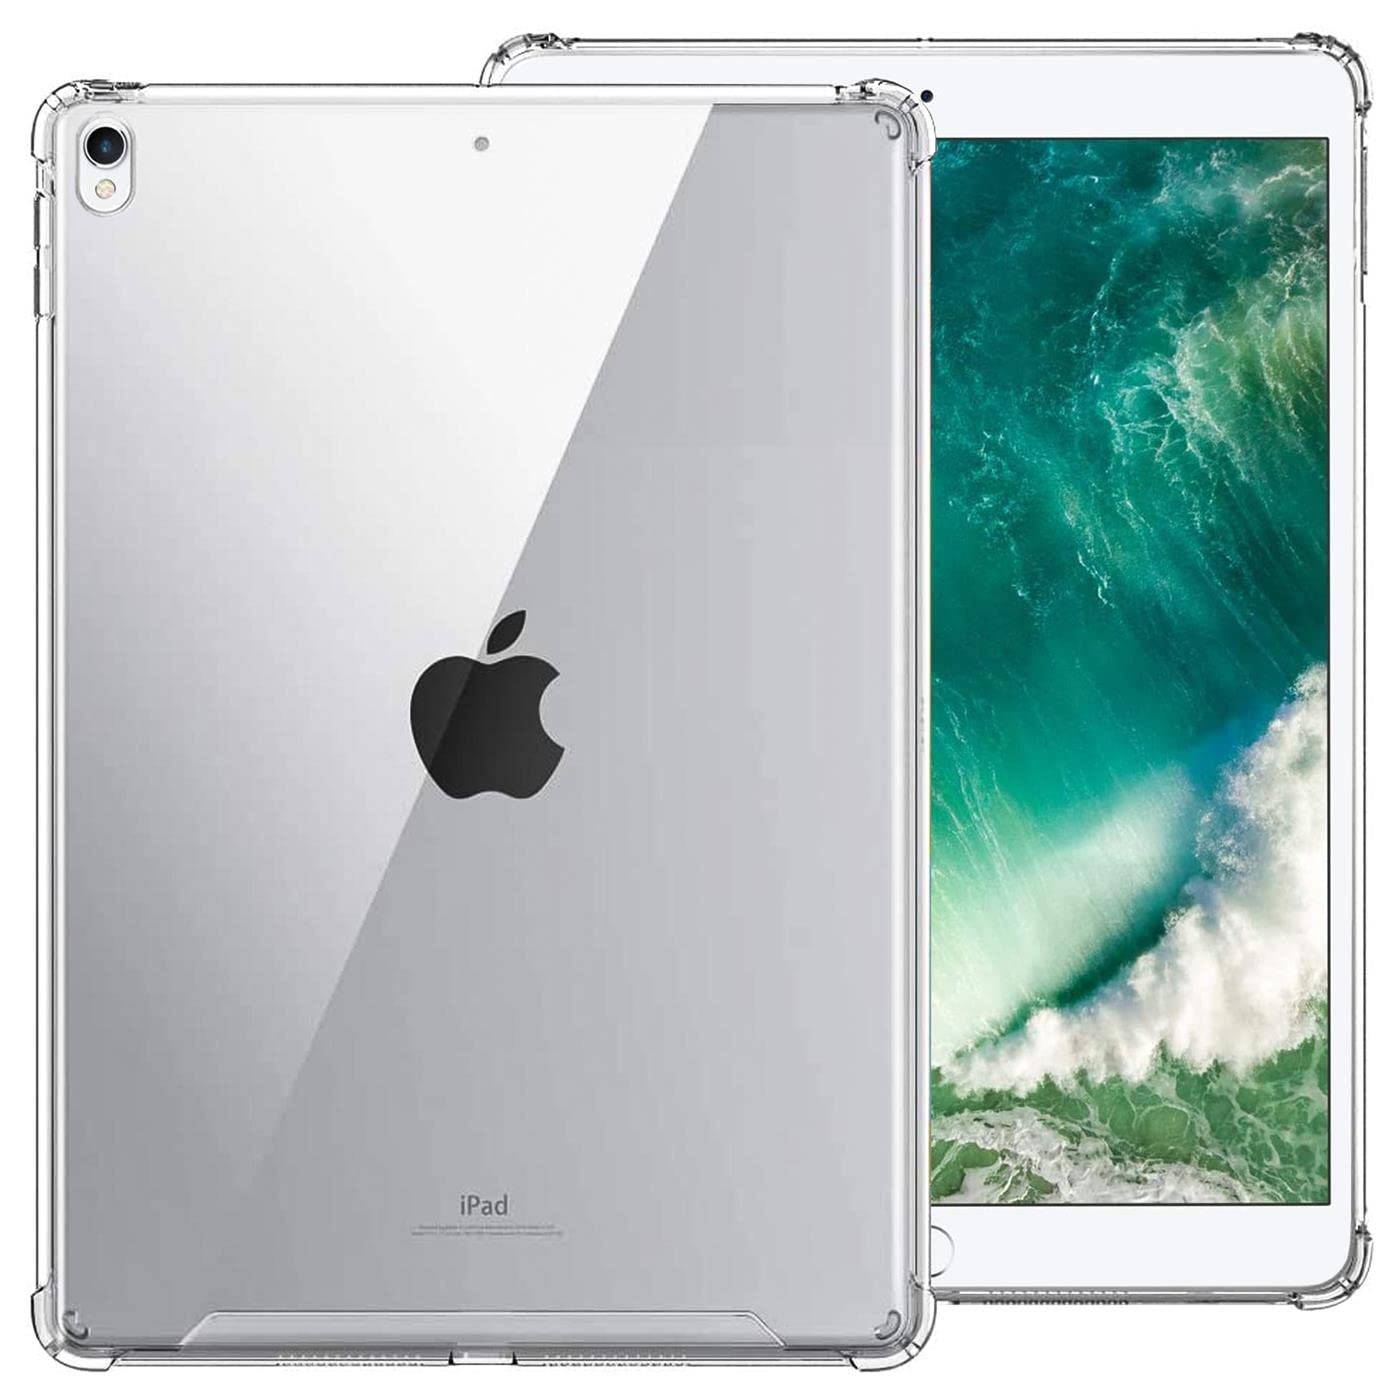 Verco ultraleichte Tablet-Hülle für iPad Pro 10.5 Zoll, Robustes Case verstärkter Kantenschutz Schutzhülle für Apple iPad Pro 10.5 Hülle Transparent